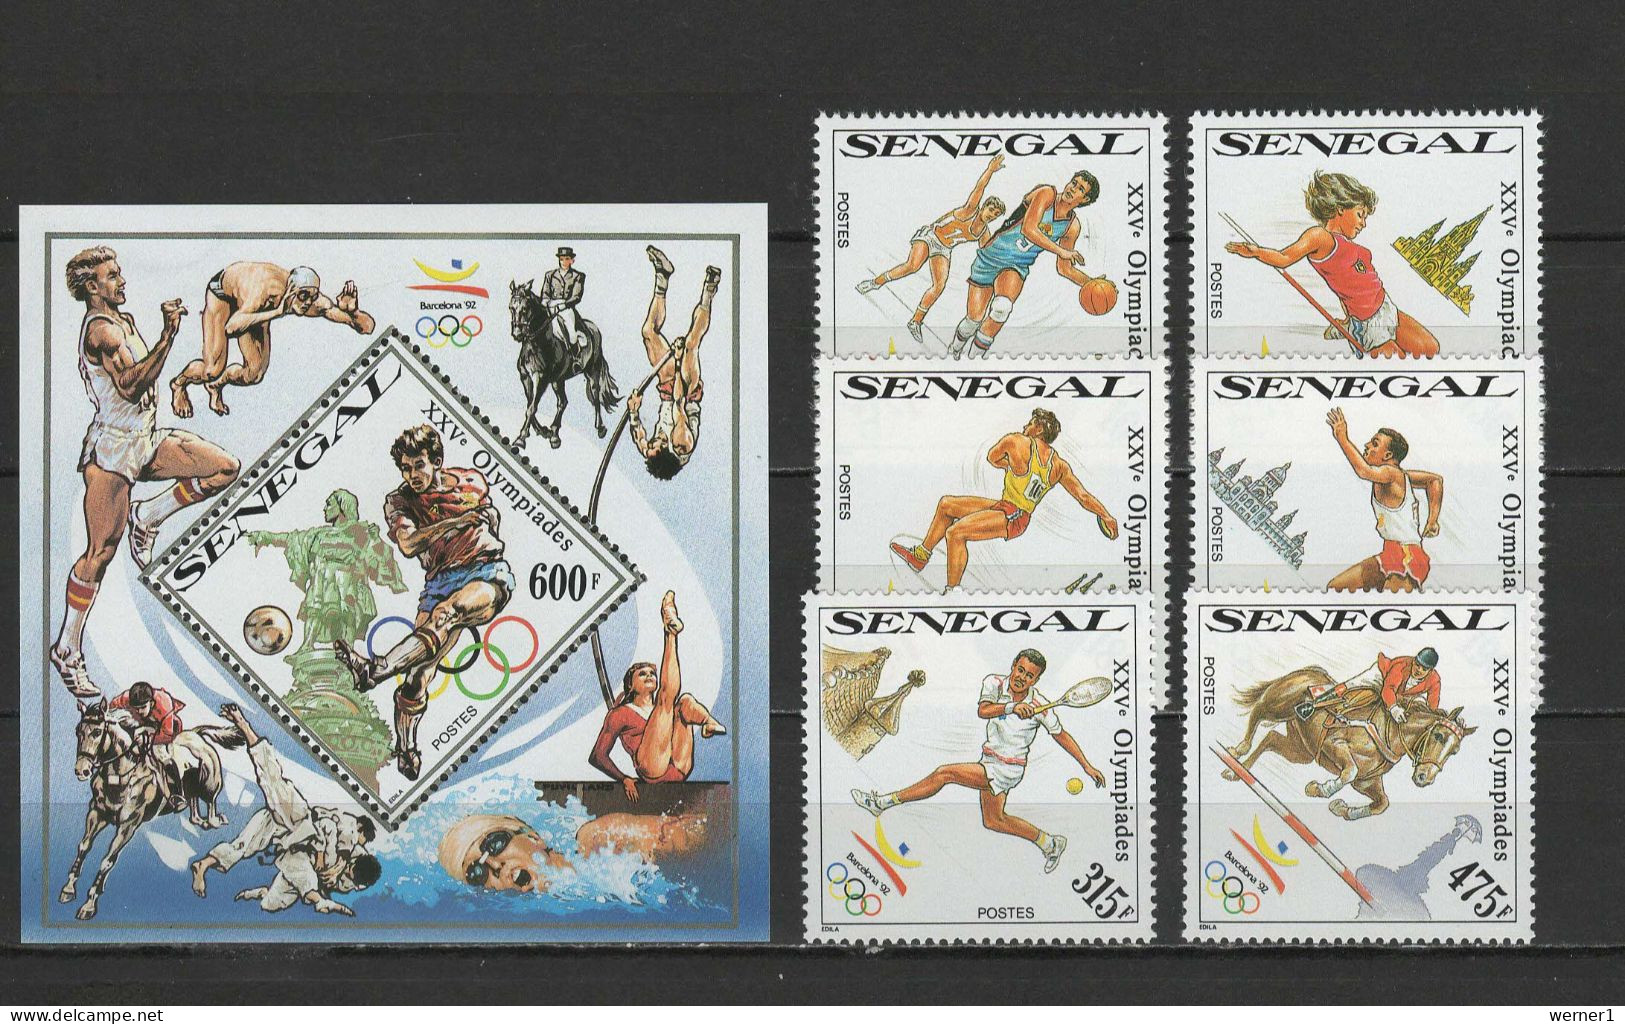 Senegal 1990 Olympic Games Barcelona, Football Soccer, Judo, Tennis, Equestrian Etc. Set Of 6 + S/s MNH - Verano 1992: Barcelona